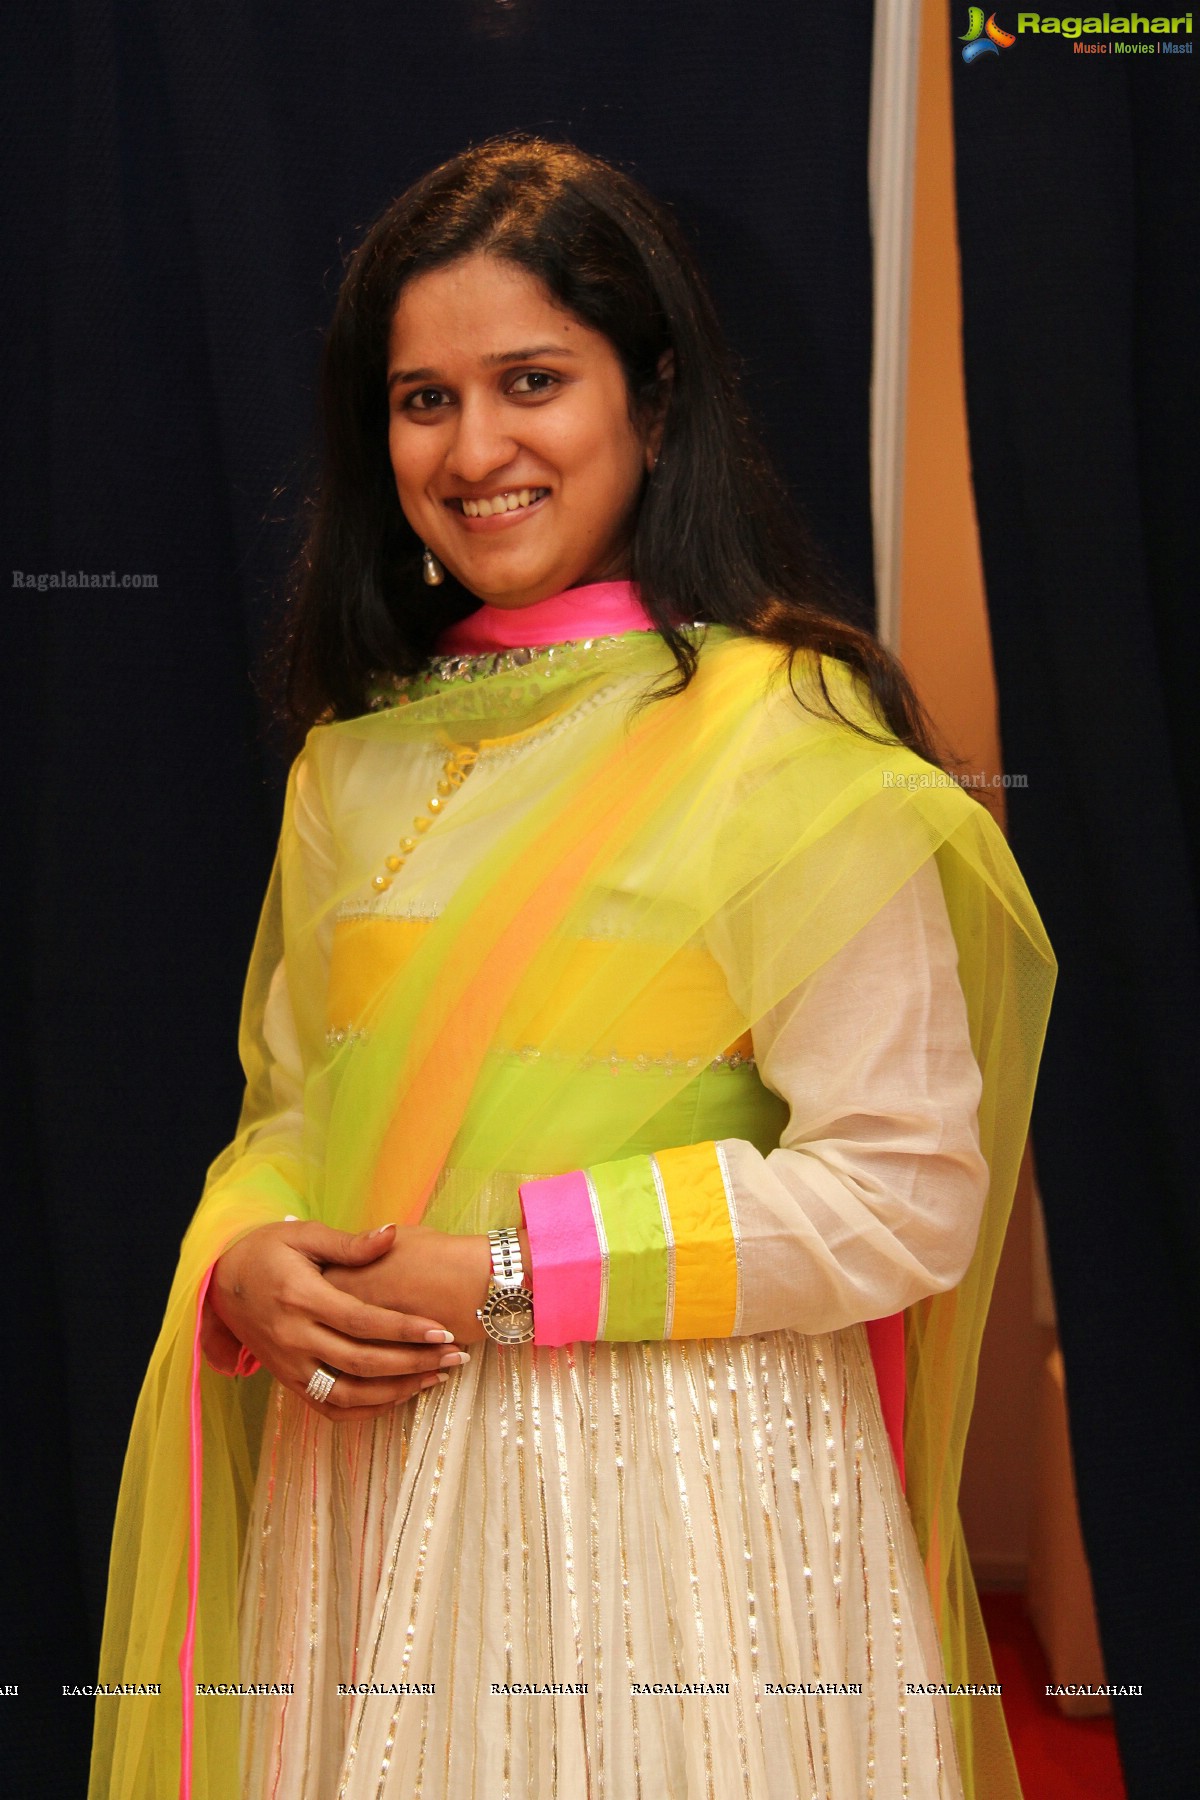 Fashionista Exhibition by Ritika Agarwal (October 2013)